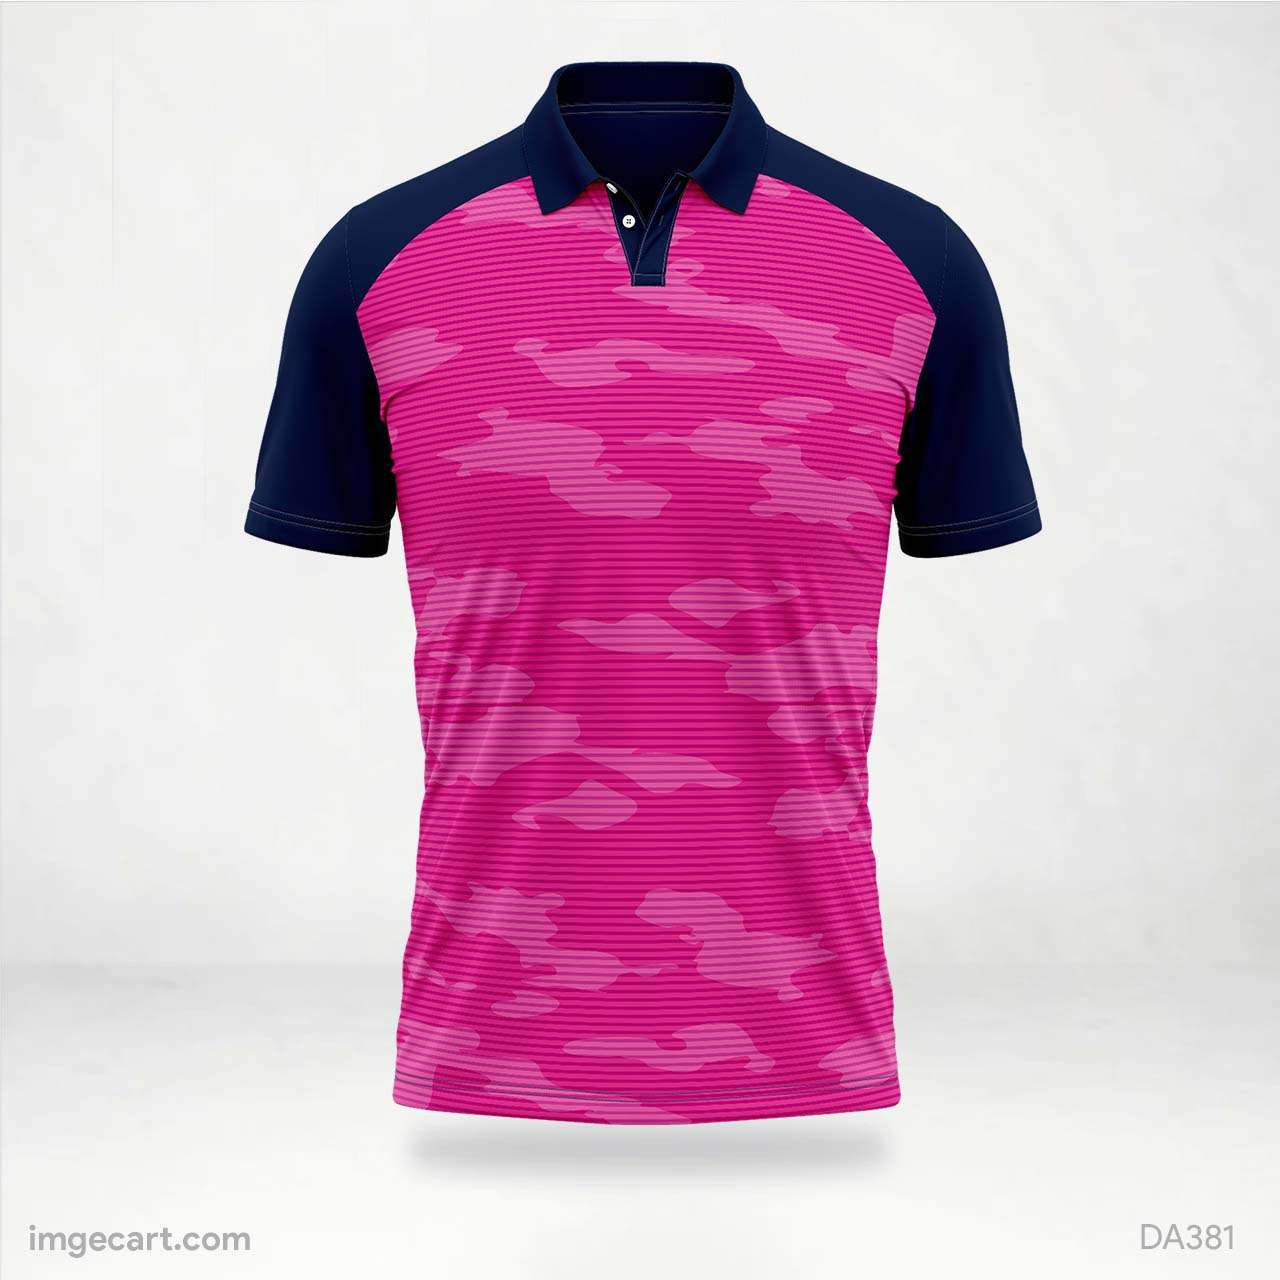 Cricket Jersey design pink and Blue - imgecart